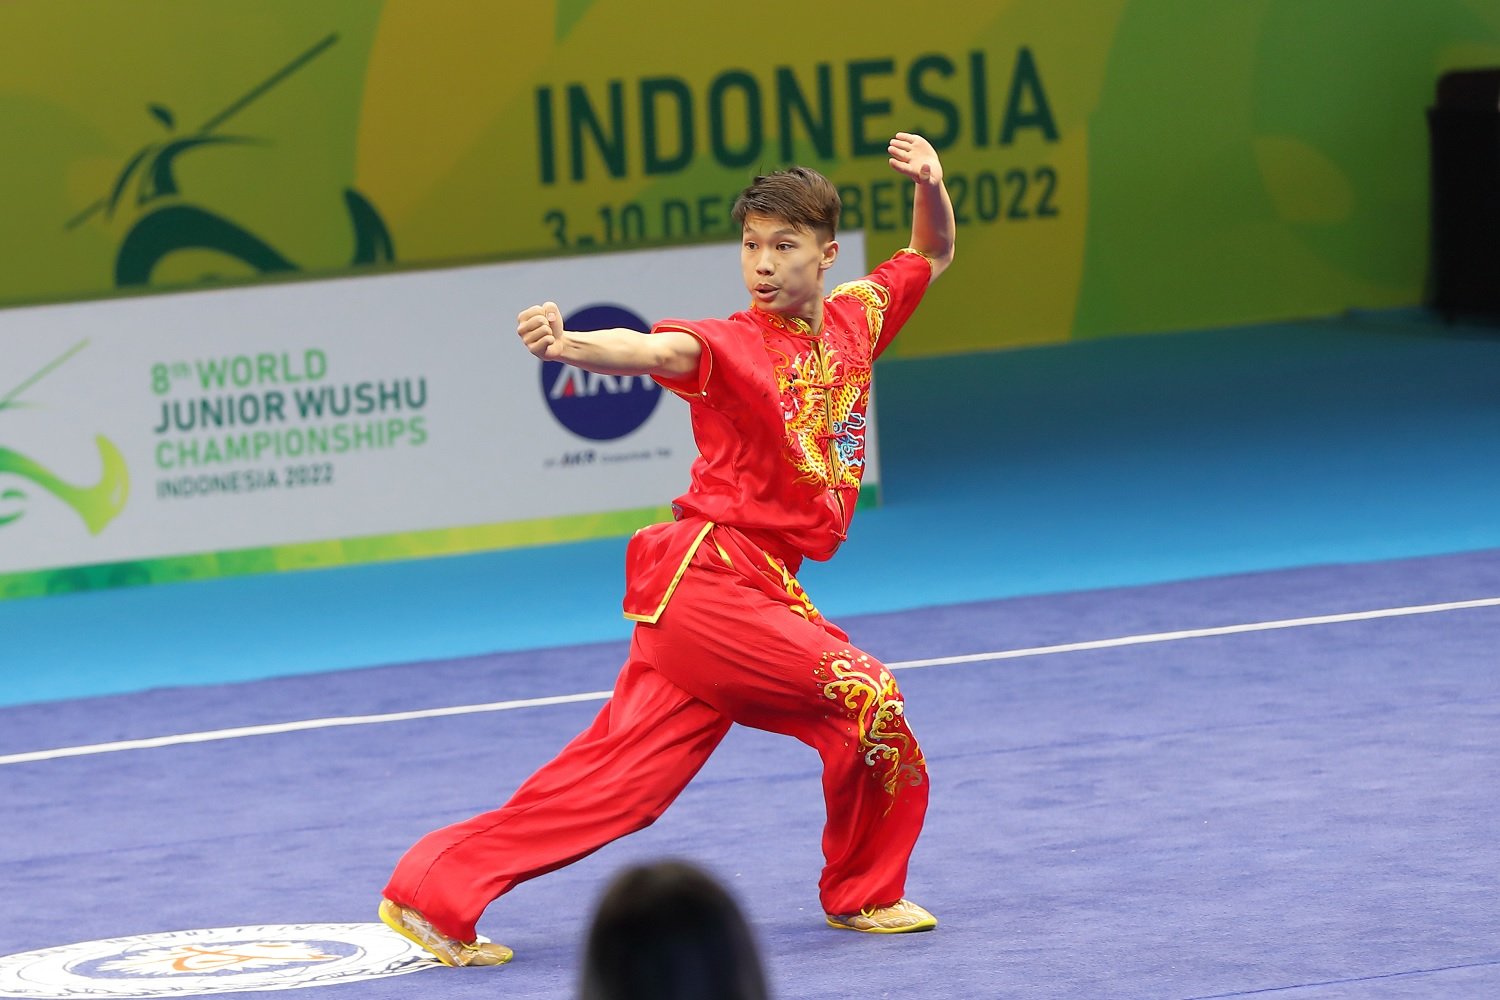 world-junior-wushu-championships-indonesia-tangerang-2022-wayland-li-227.jpg